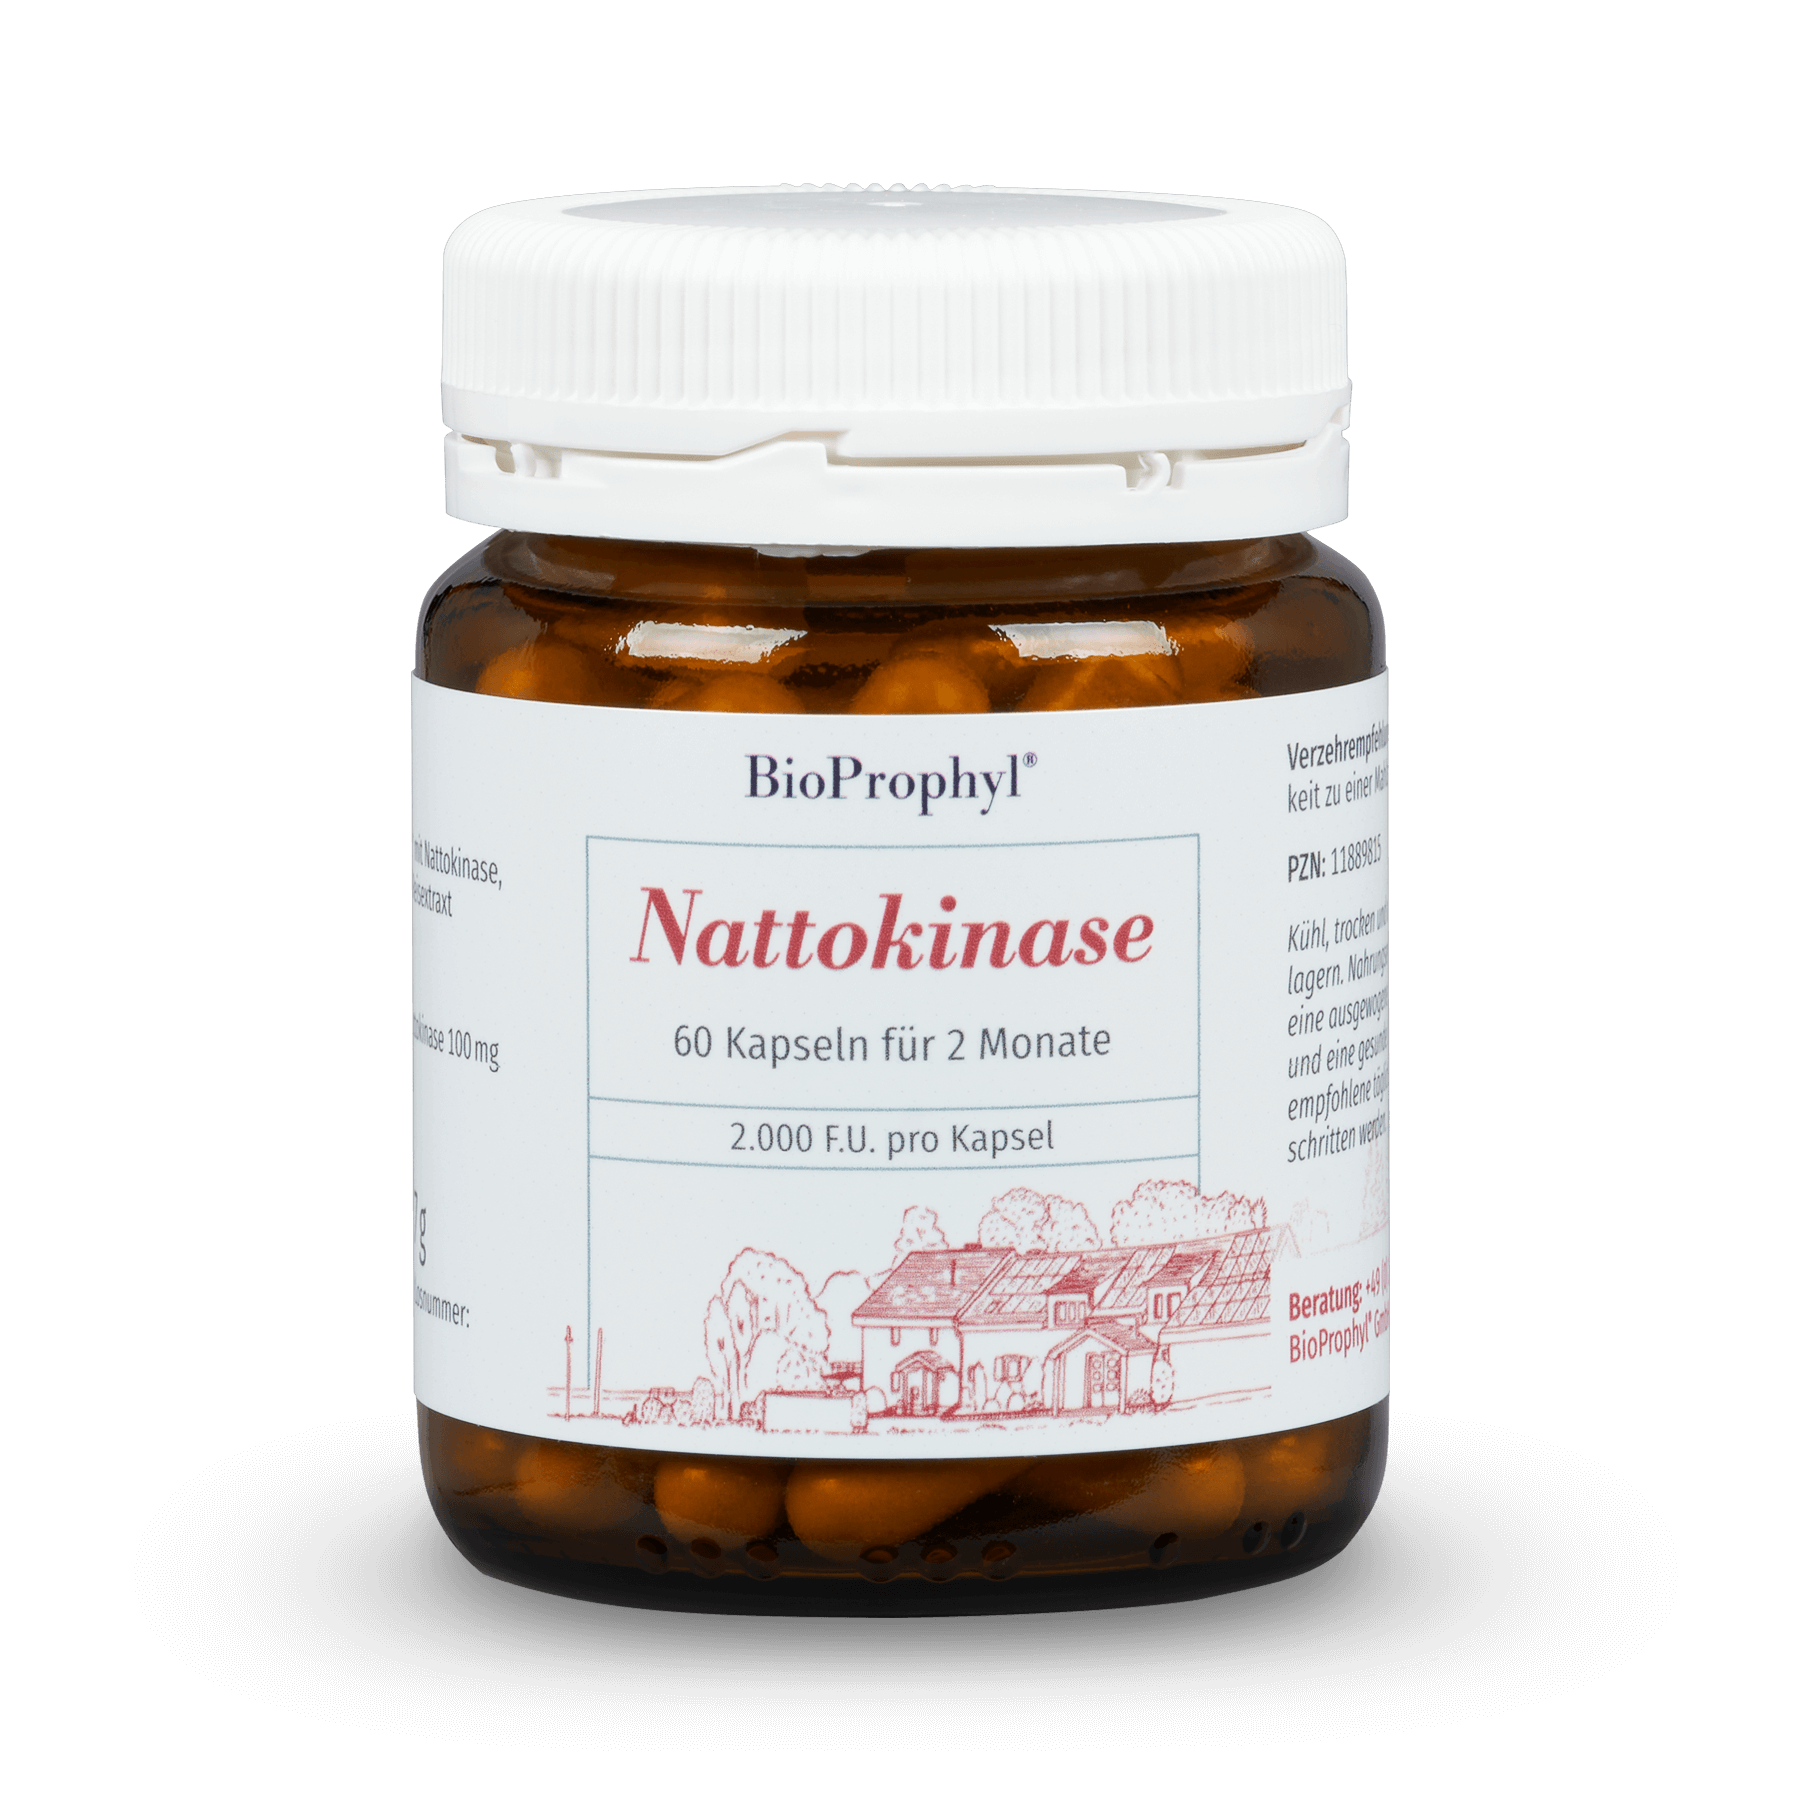 BioProphyl Nattokinase 60 vegetarische capsules met 100 mg nattokinase (2.000 FU)